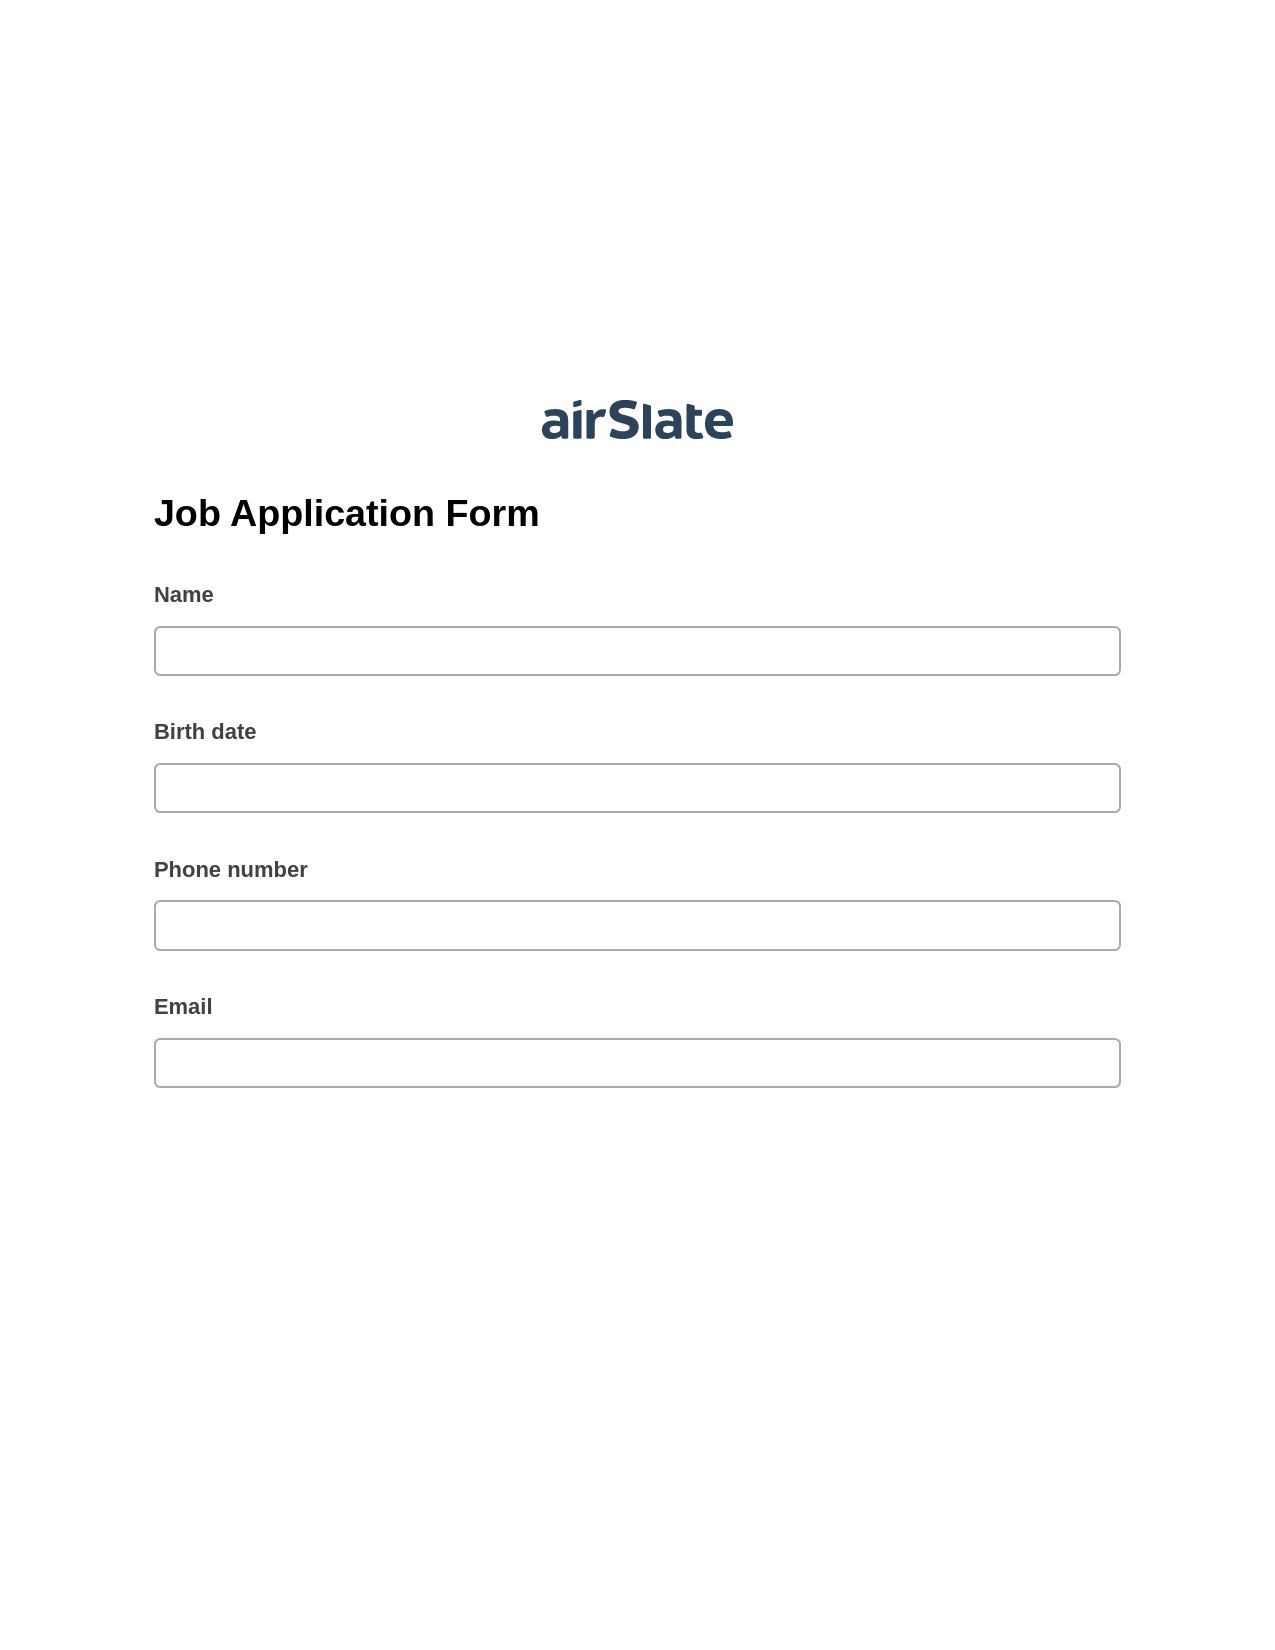 Job Application Form Pre-fill Document Bot, Create slate bot, OneDrive Bot